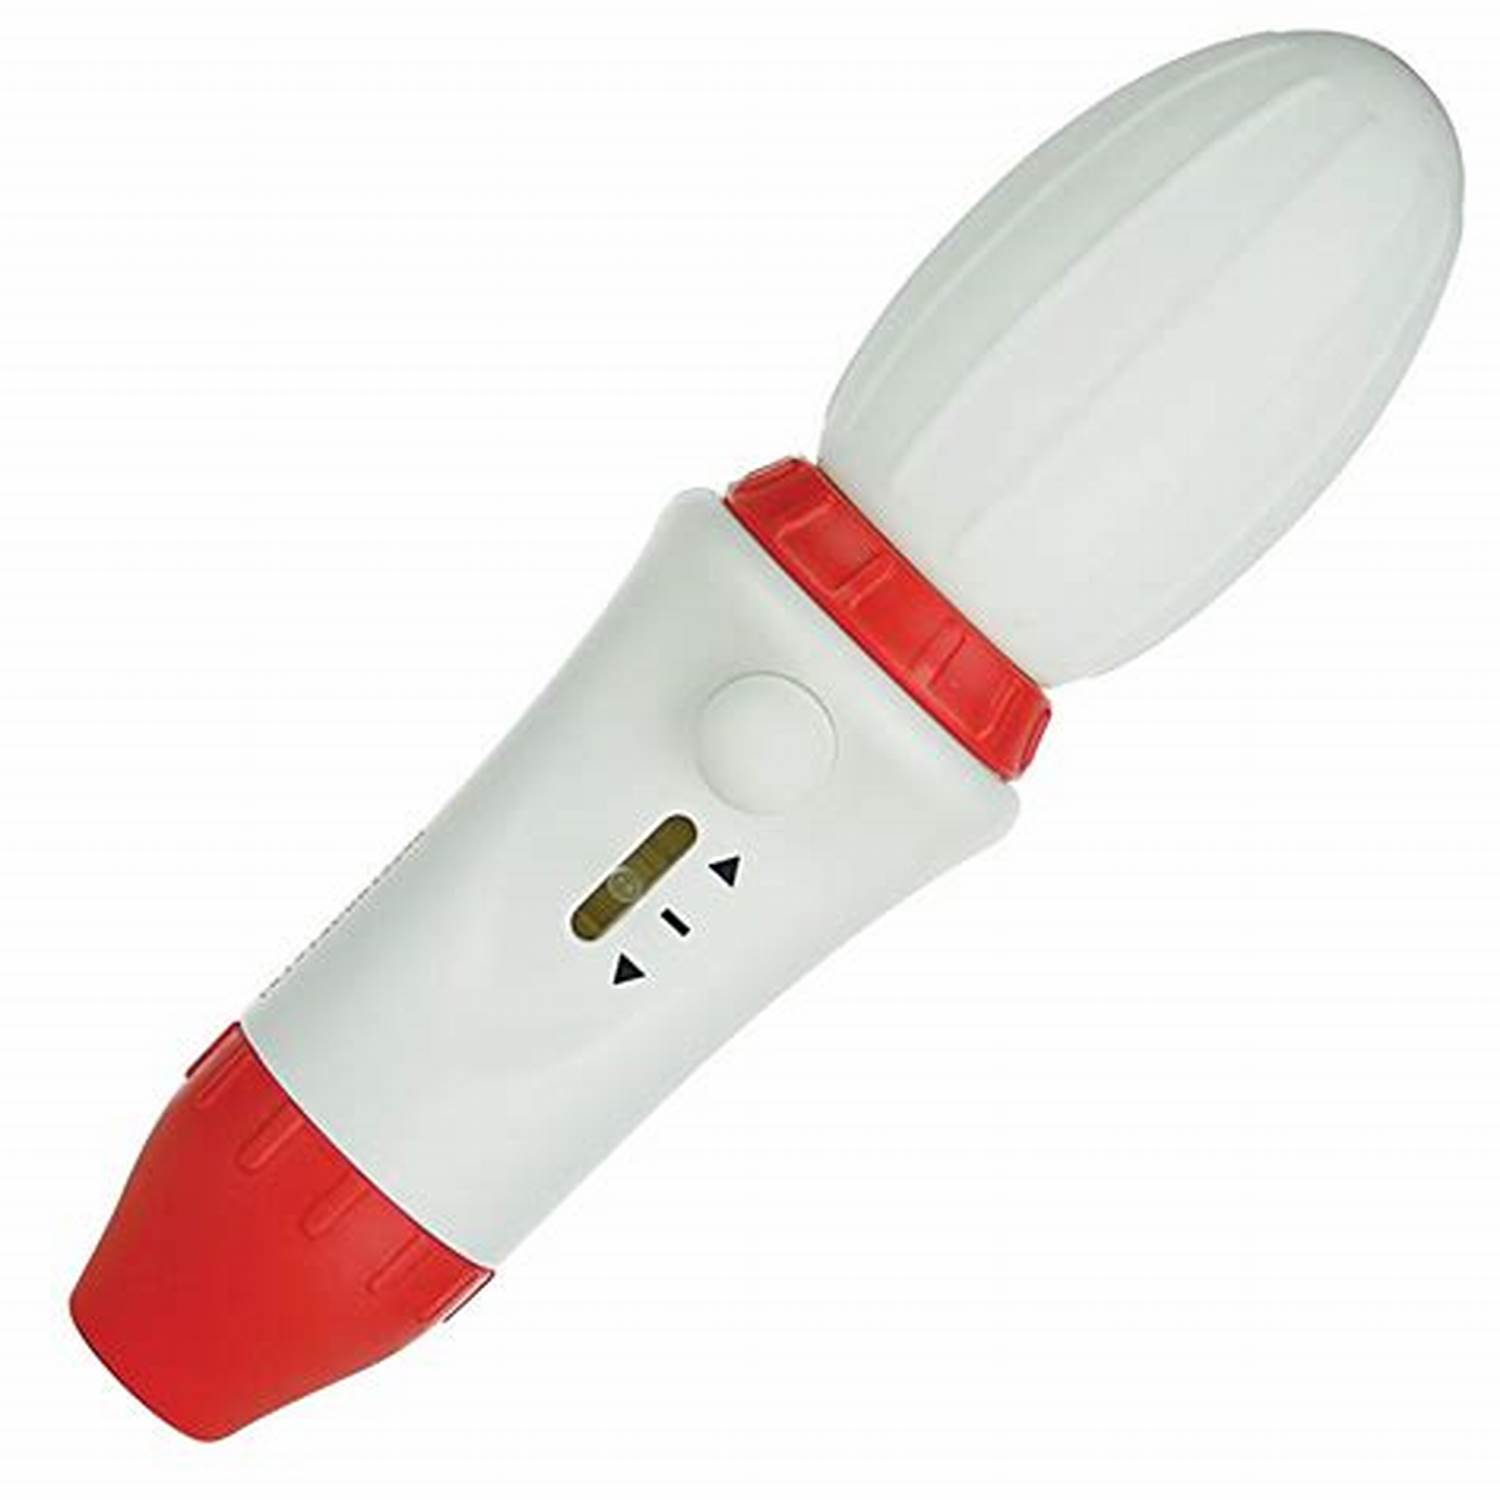 D-Lab™ Levo Pipette Controller, Red